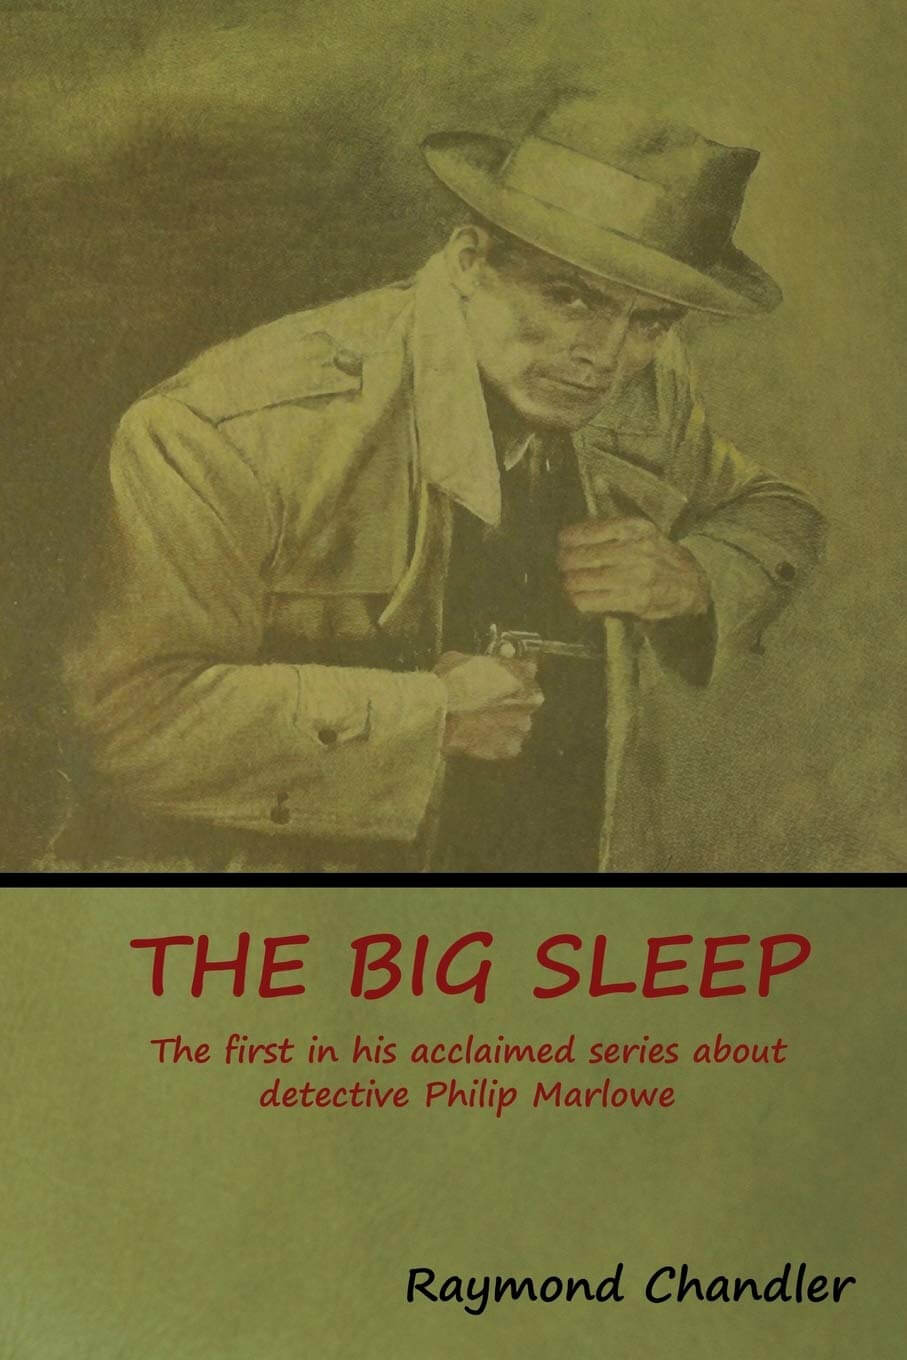 "The Big Sleep" by Raymond Chandler